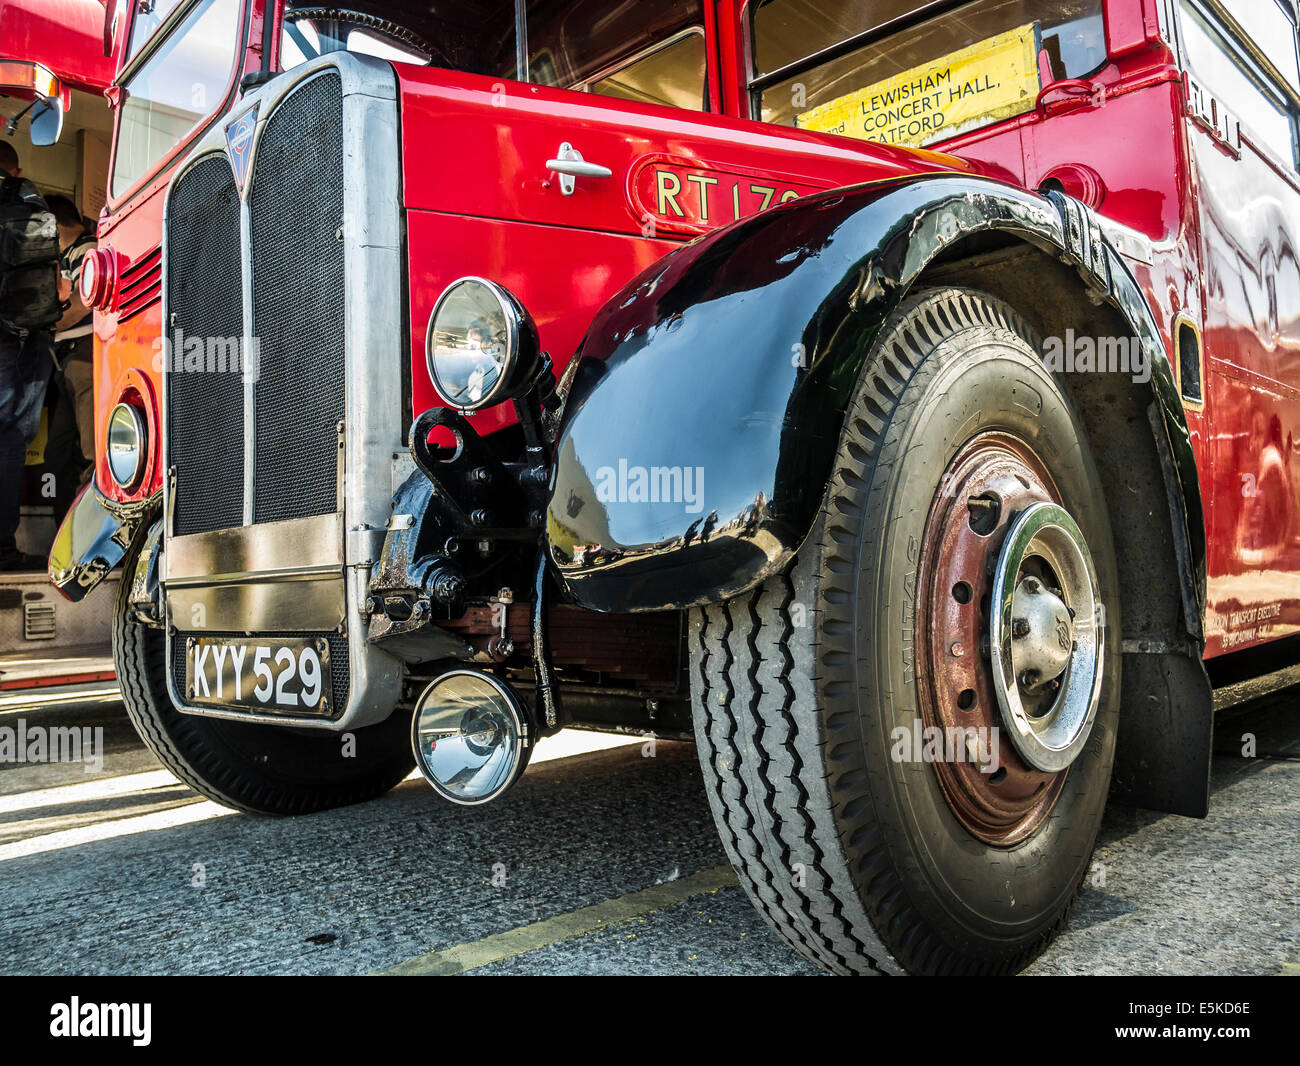 RouteMaster Bus, taken at the London Transport Museum Depot Stock Photo